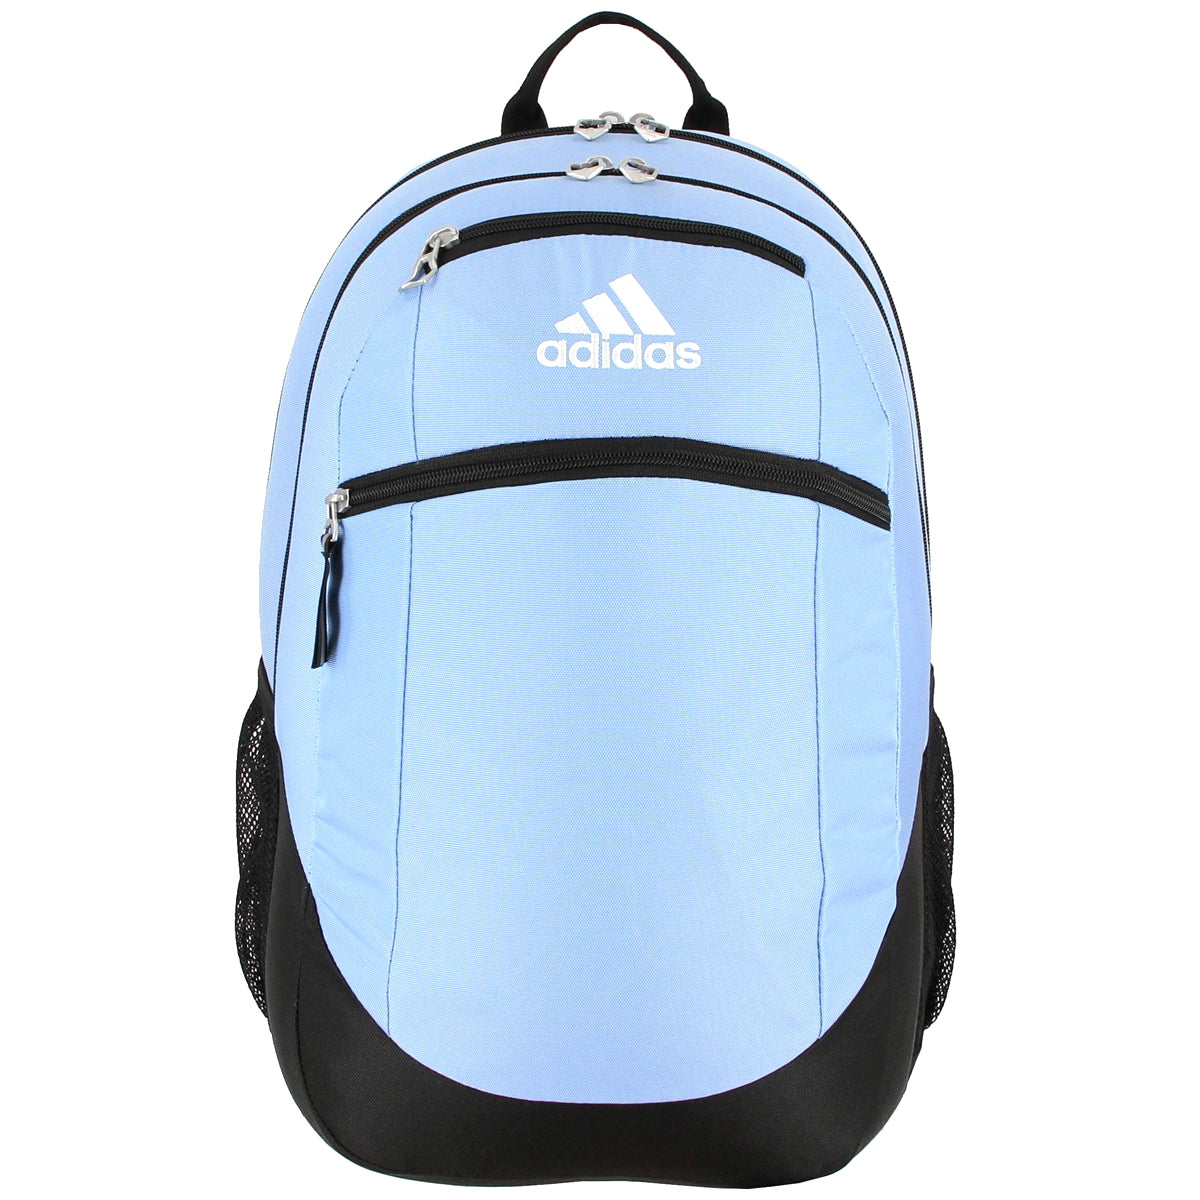 adidas Striker II Team Backpack Bags Adidas One Size Collegiate Light Blue/Black/White 